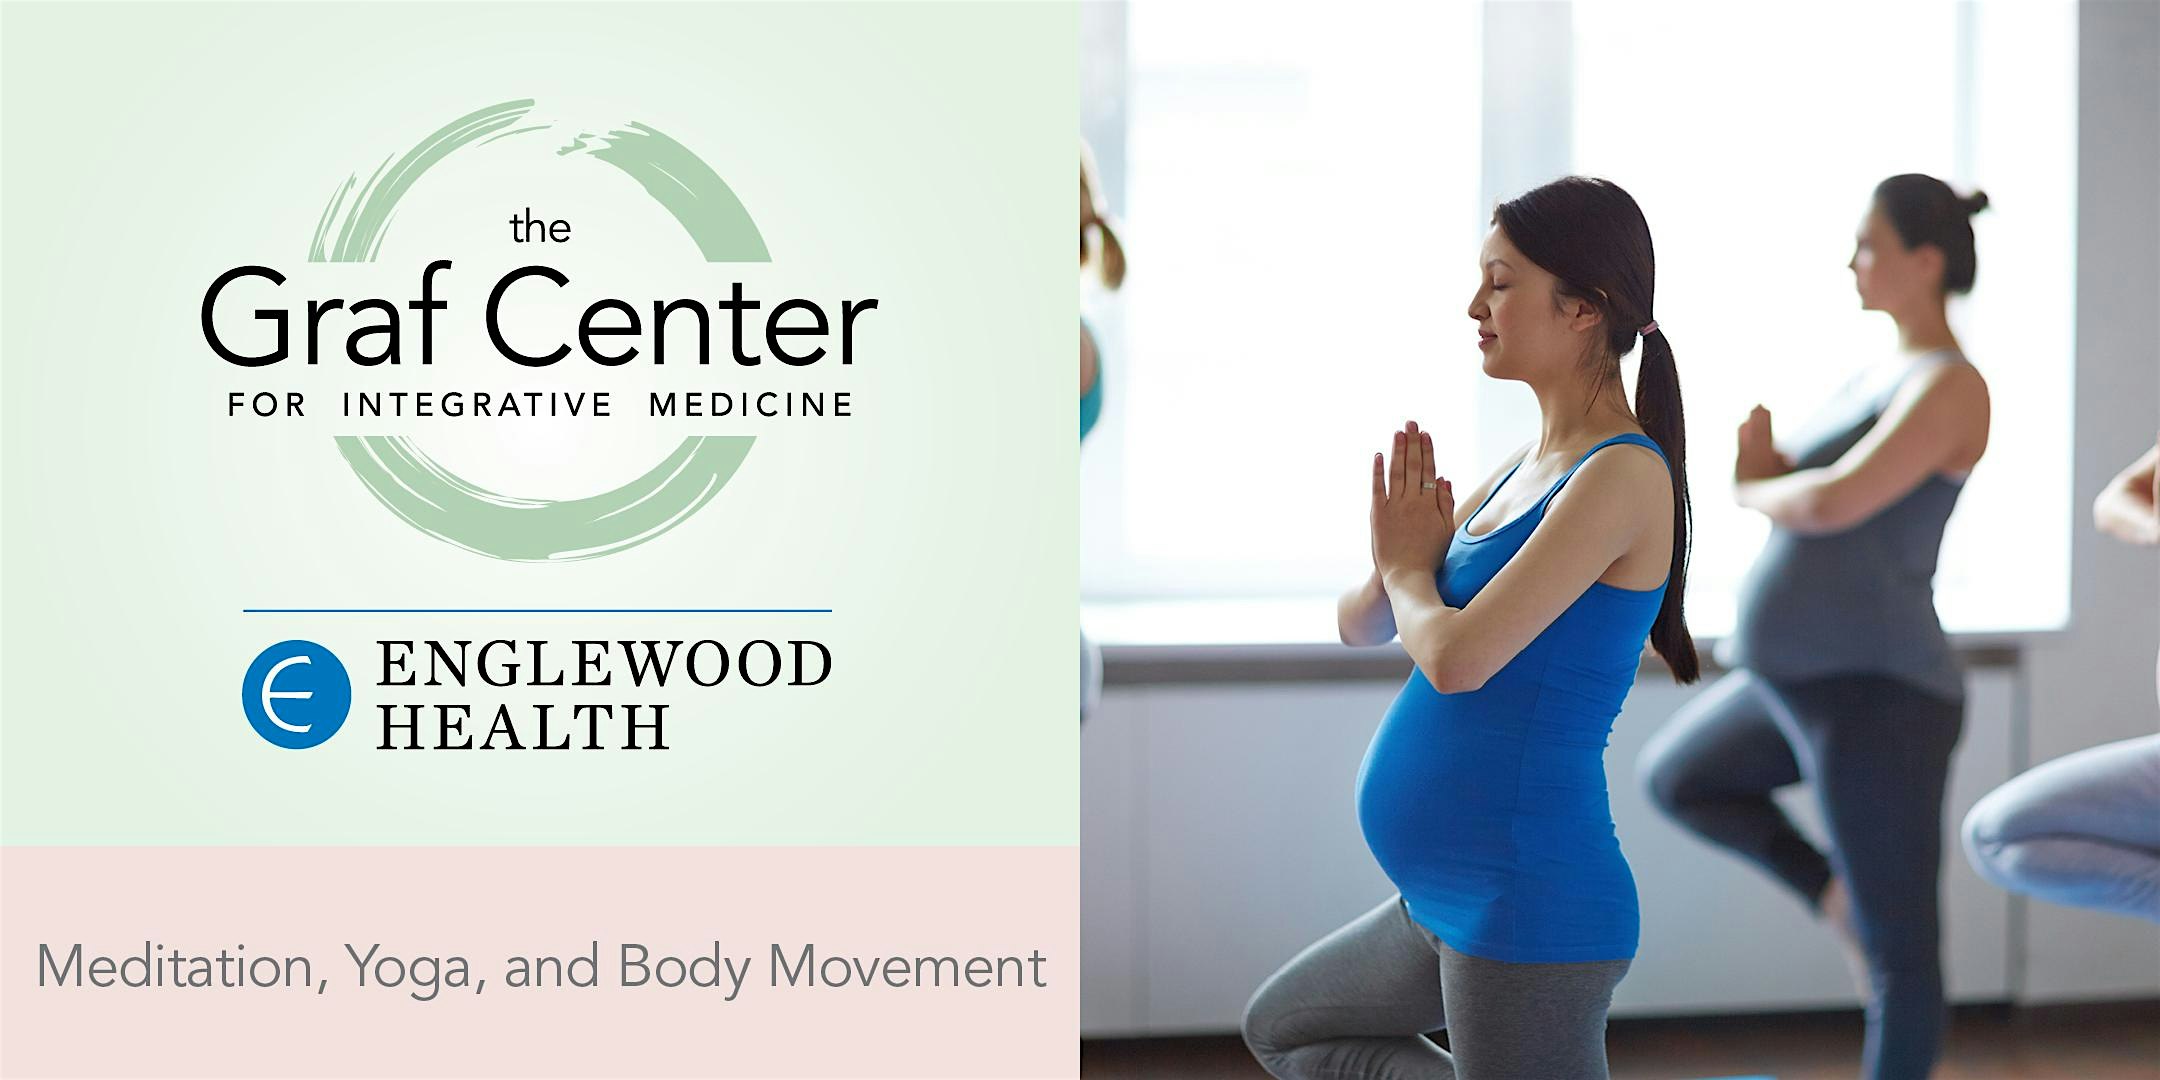 More info: Prenatal Yoga and Meditation (8-week series) - Beginning January 2023